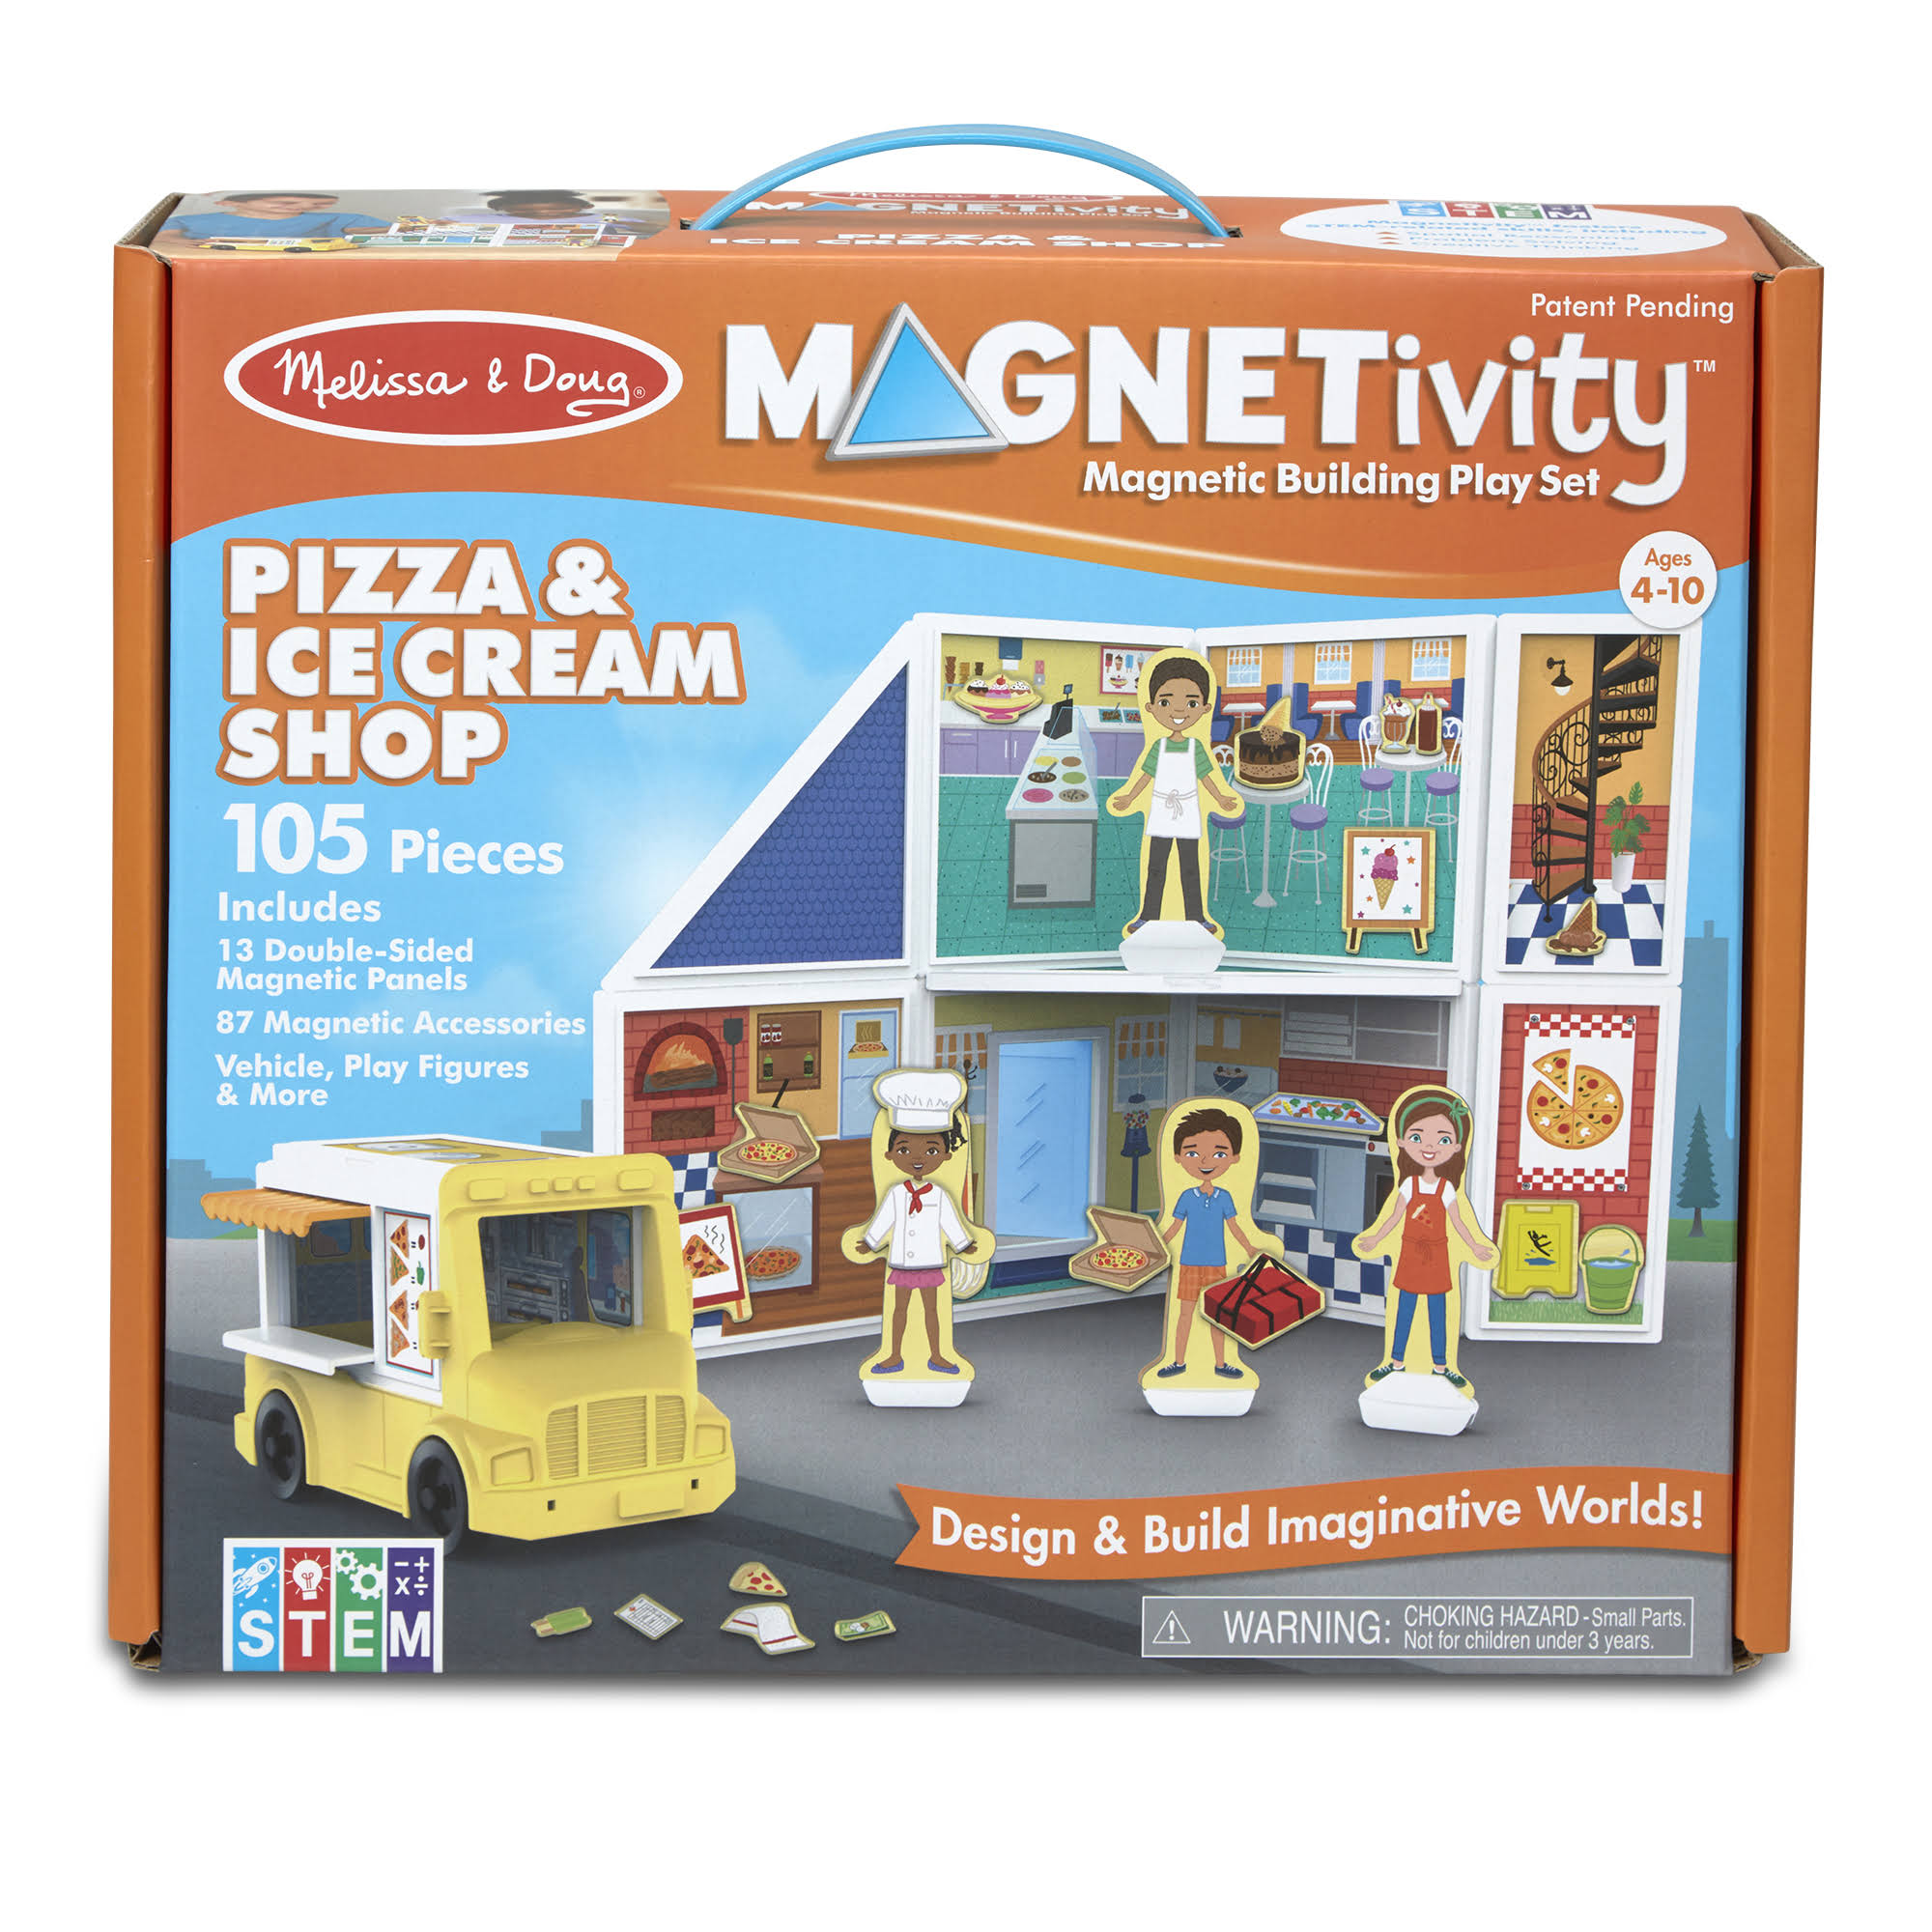 Melissa & Doug Magnetivity - Pizza & Ice Cream Shop Magnetic Building Play Set